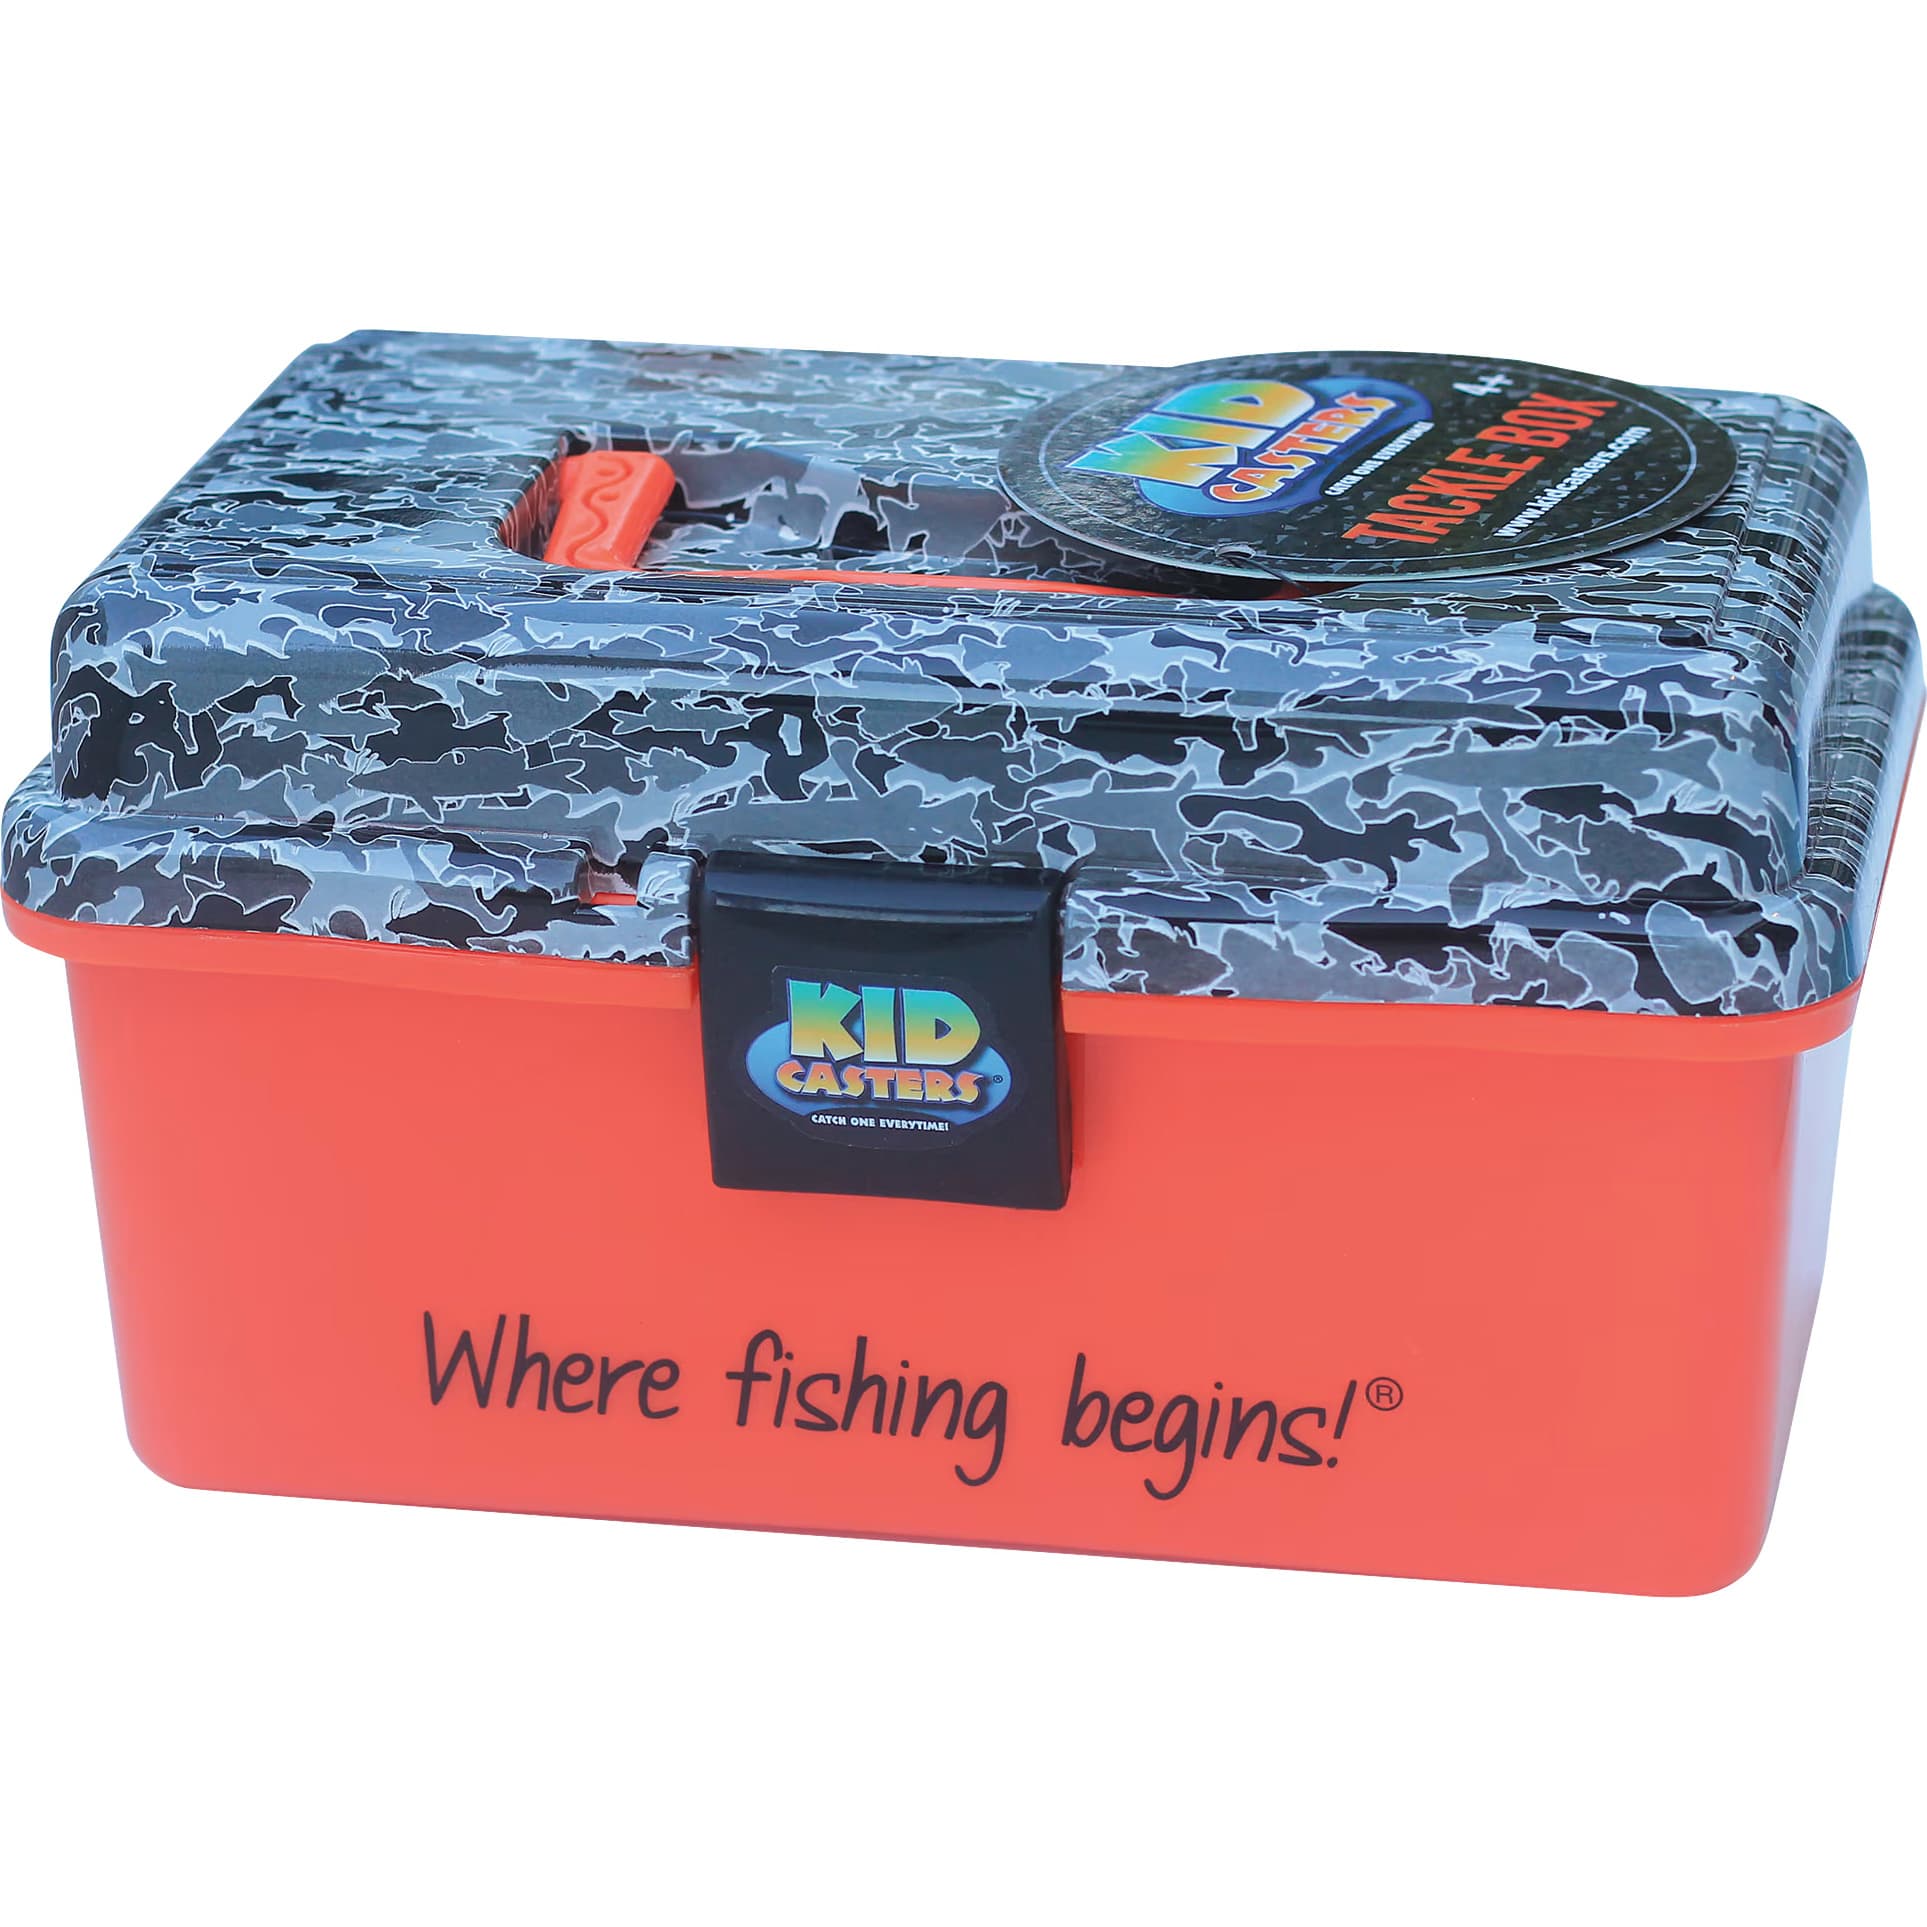 Plano® Two-Tray Tackle Box